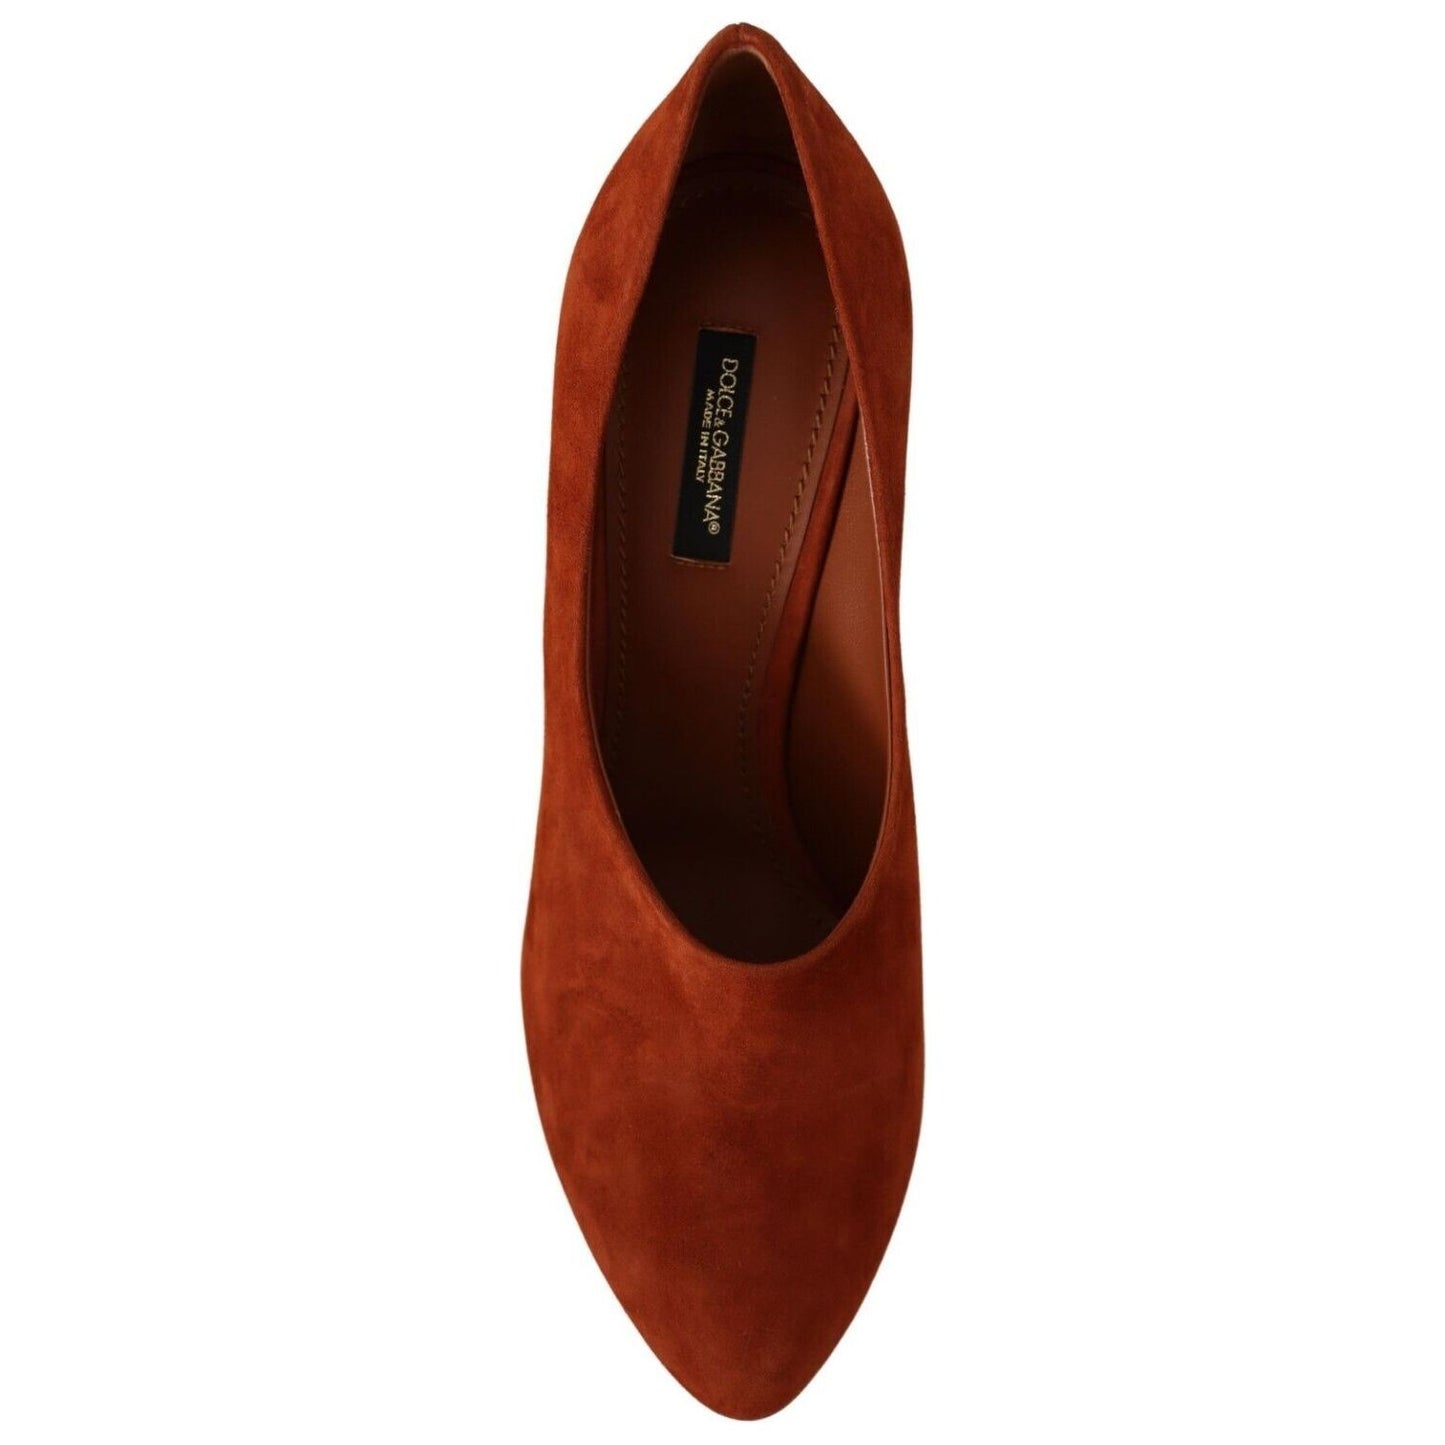 Dolce & Gabbana Elegant Cognac Suede Pumps brown-suede-leather-block-heels-pumps-shoes